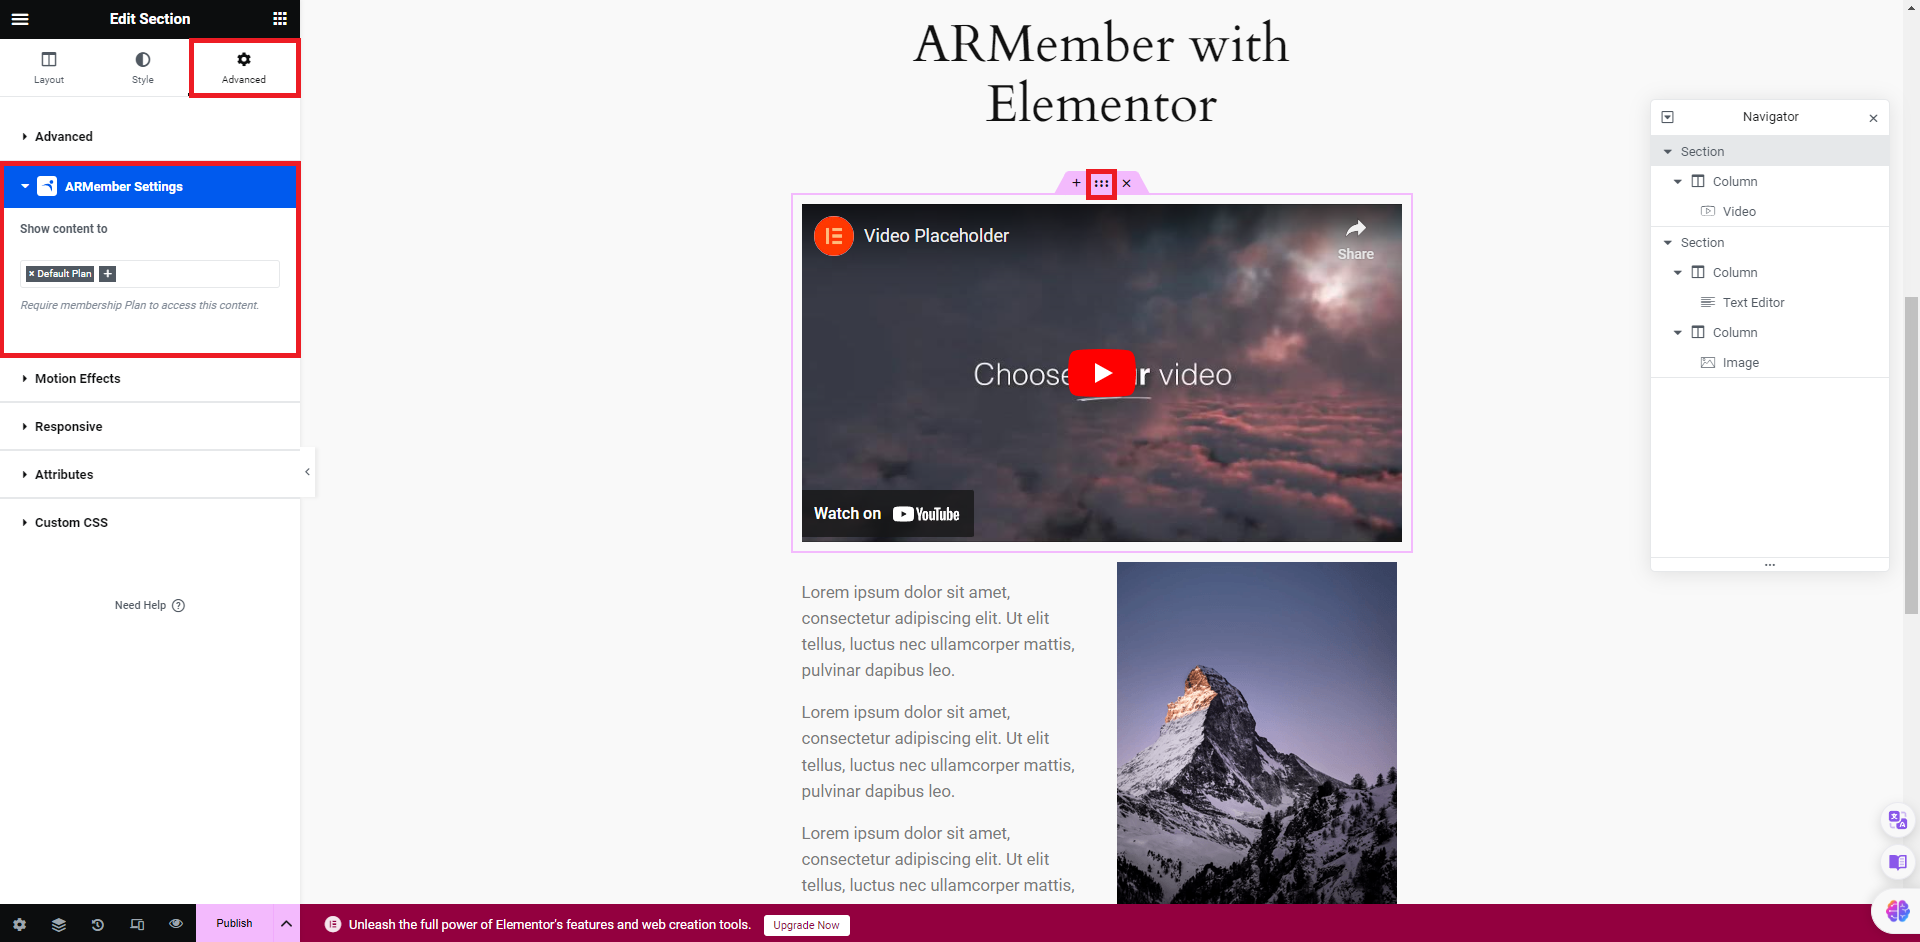 ARMember Register Form Widget on Elementor